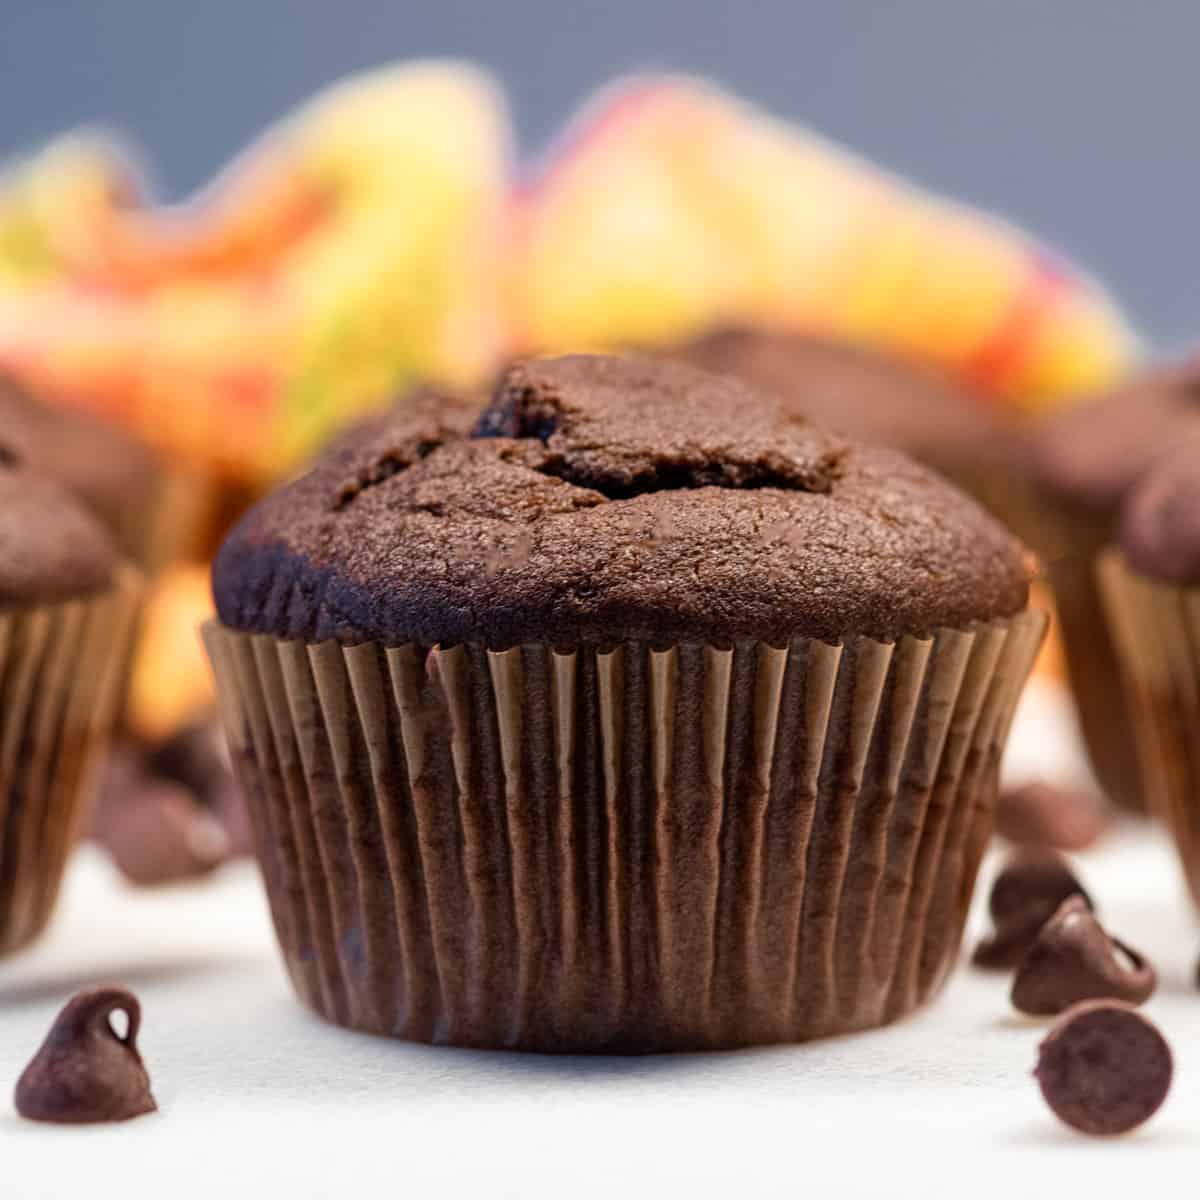 A single vegan double chocolate muffin.